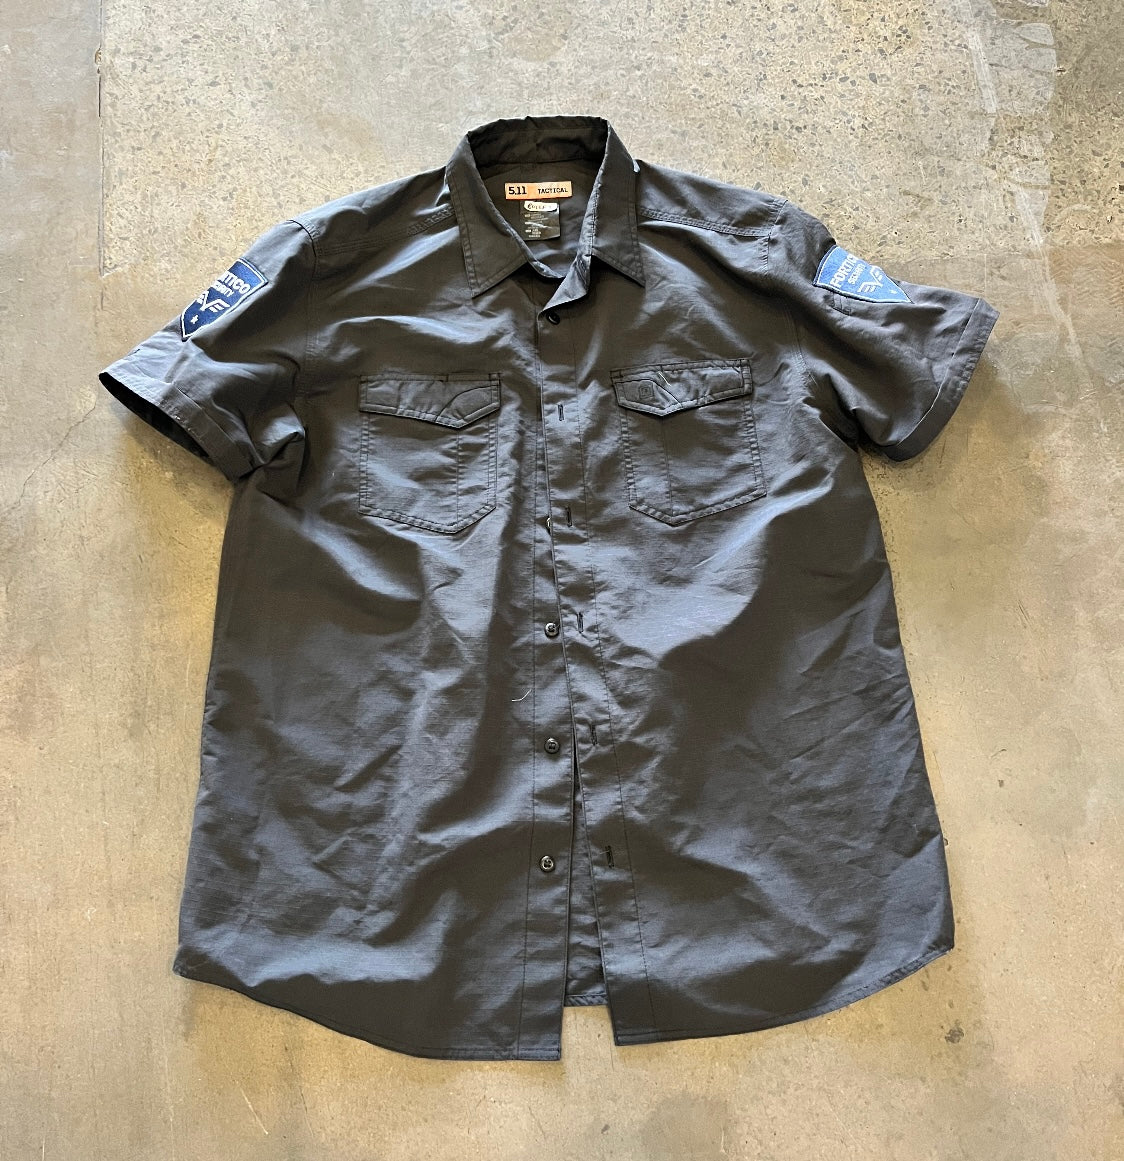 WRATH OF MAN: Bullet’s FORTICO Tactical Uniform Vest, Shirt, Pants and Tactical Belt